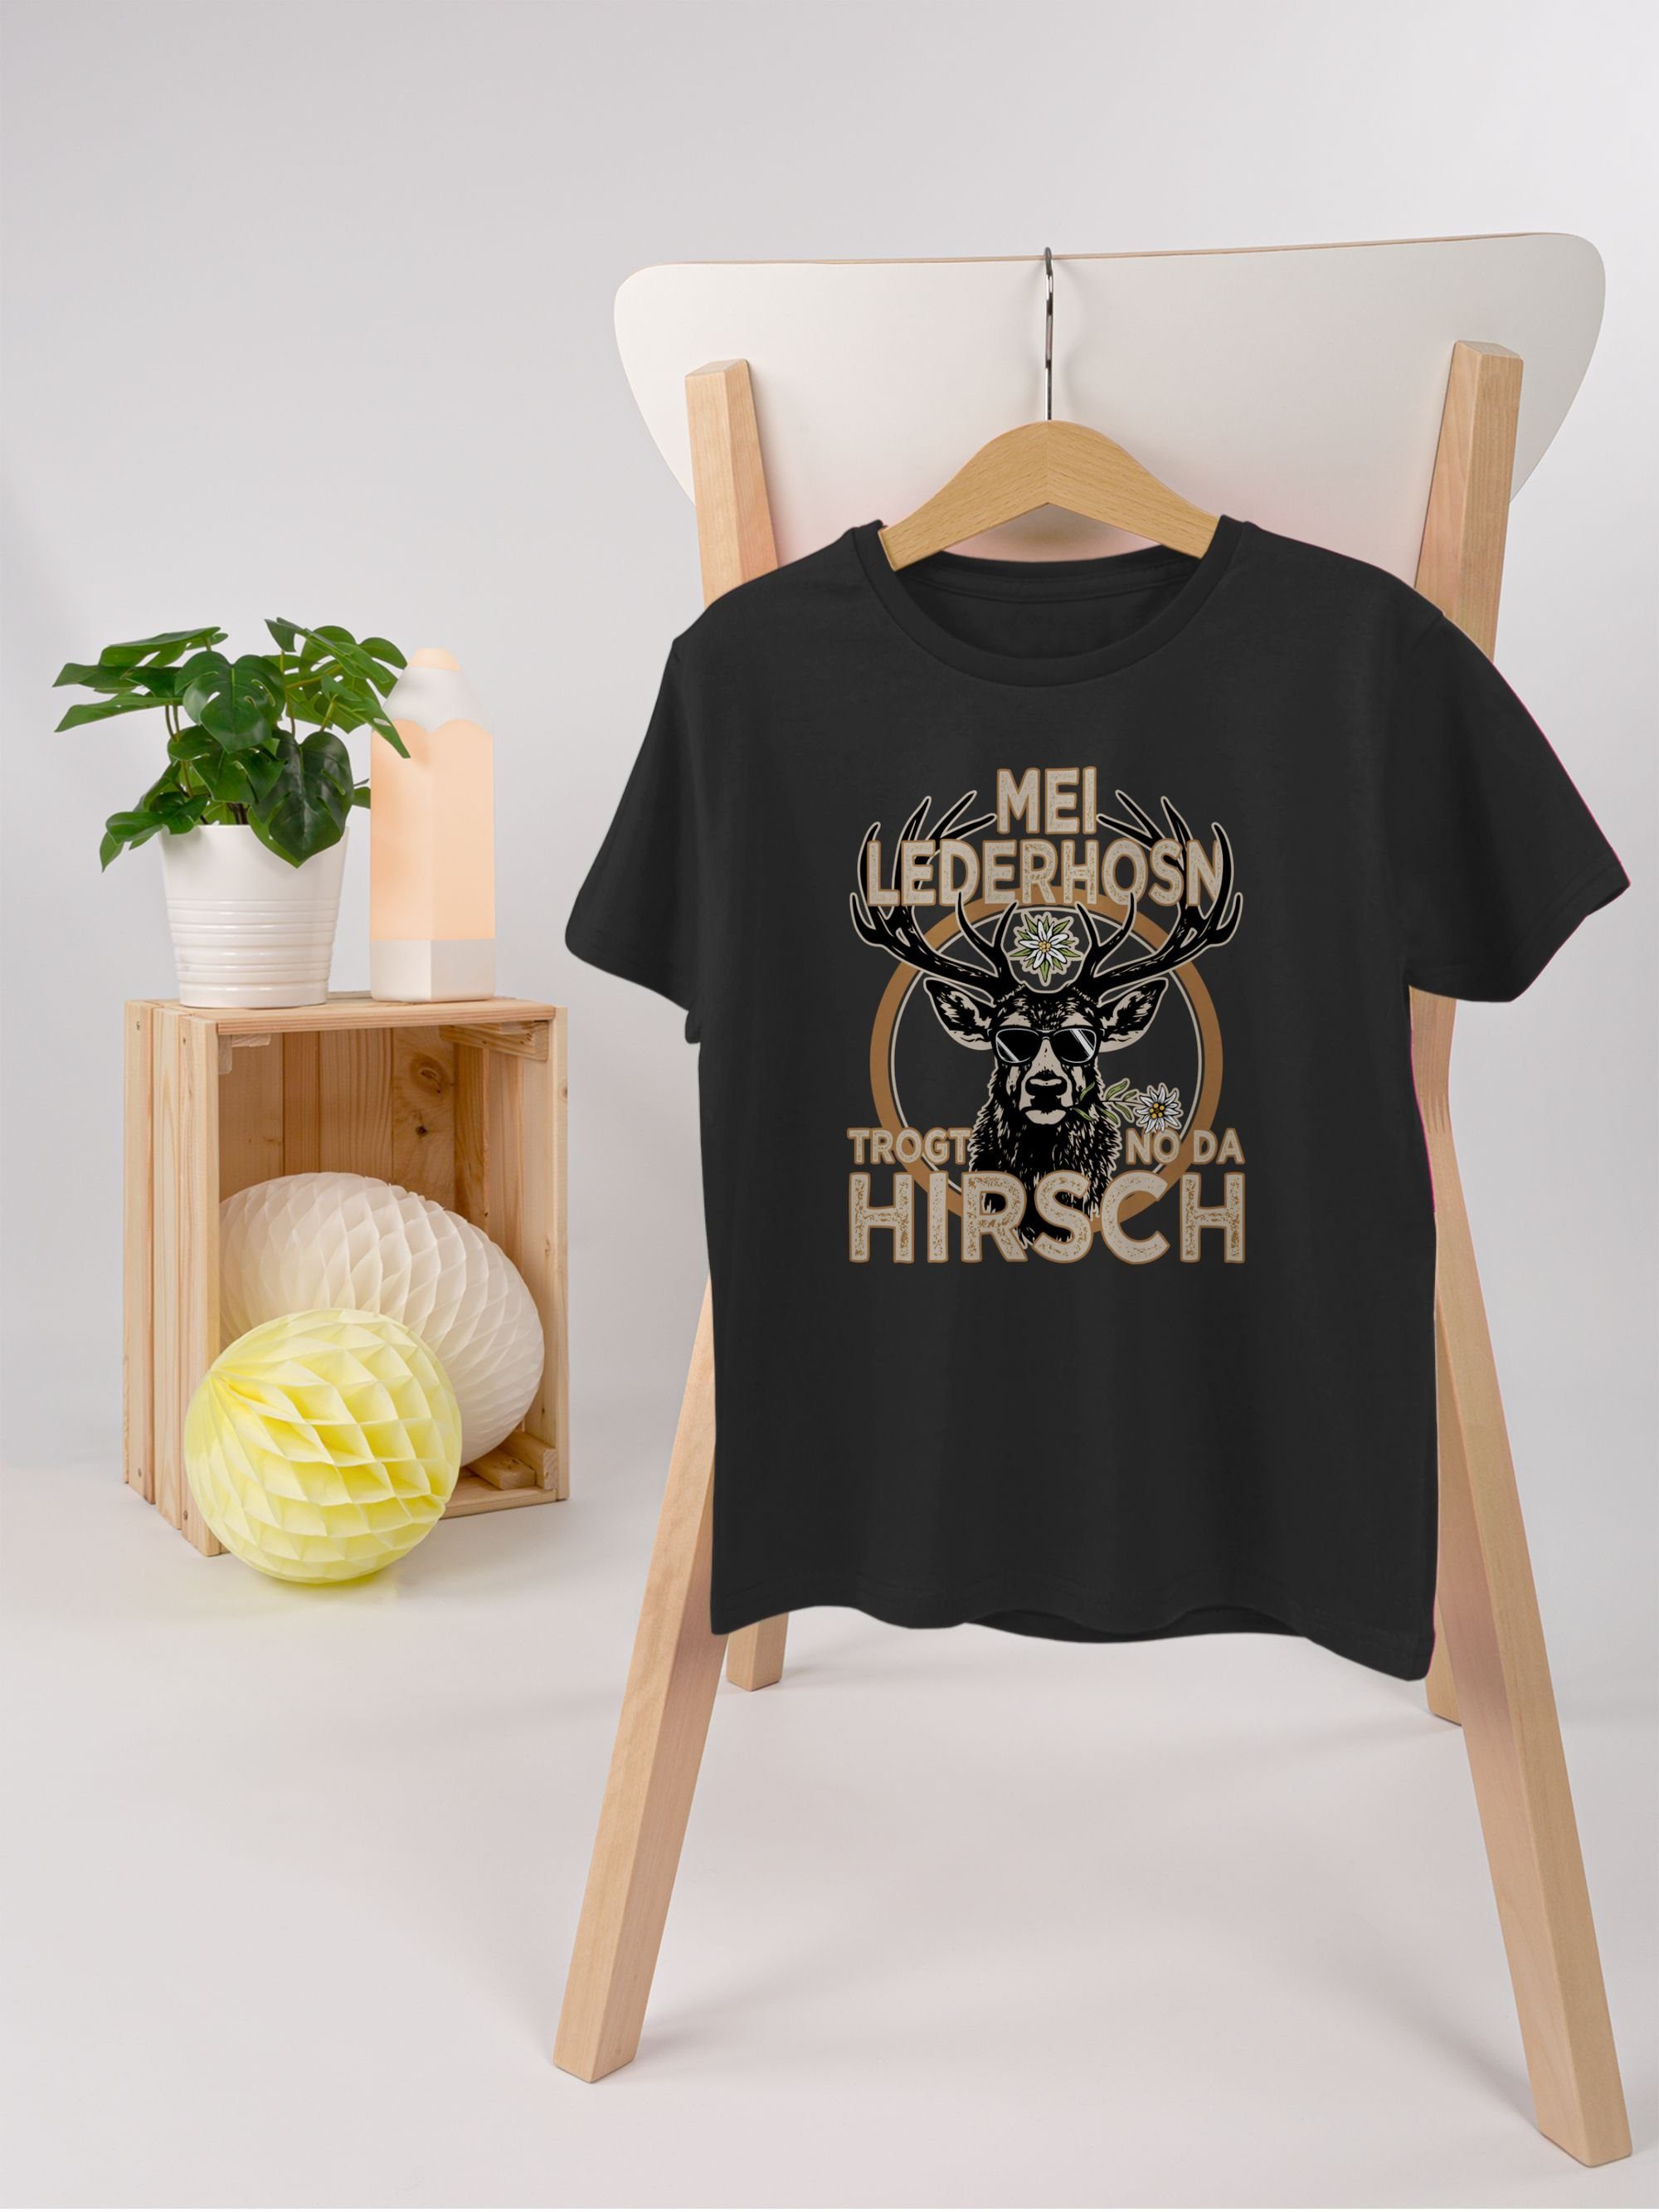 Shirtracer T-Shirt Spruch Oktoberfest Kinder Outfit der Trägt Trachten 01 für Lederhose Outfit Schwarz Mode Hirsch